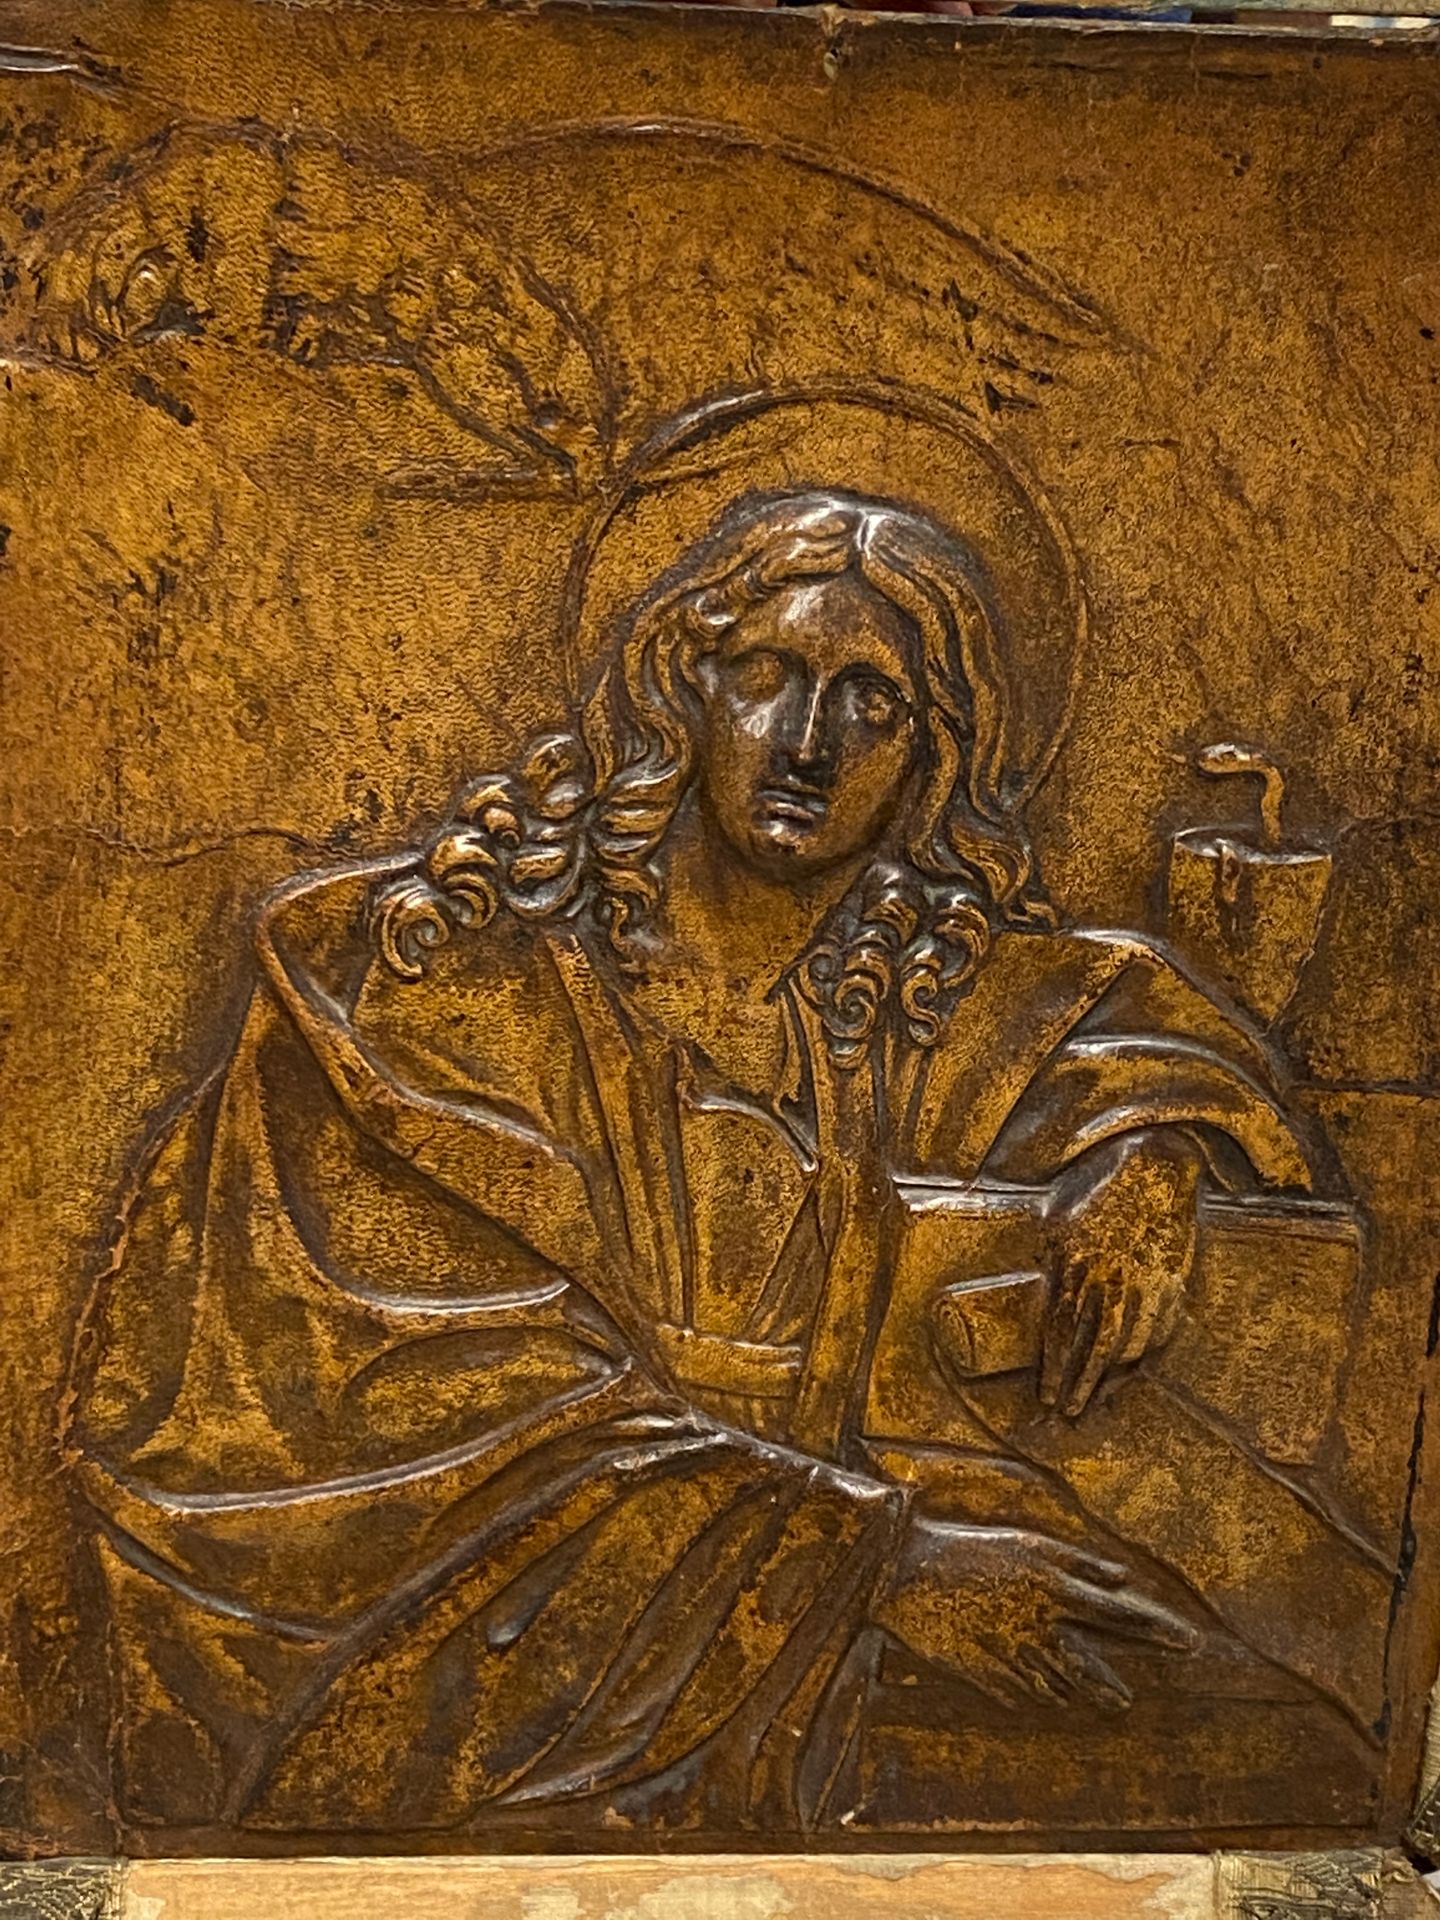 Null Travail vers 1900,

Christ

Cuir repoussé

Circa 1900

34 x 27 cm (à vue)